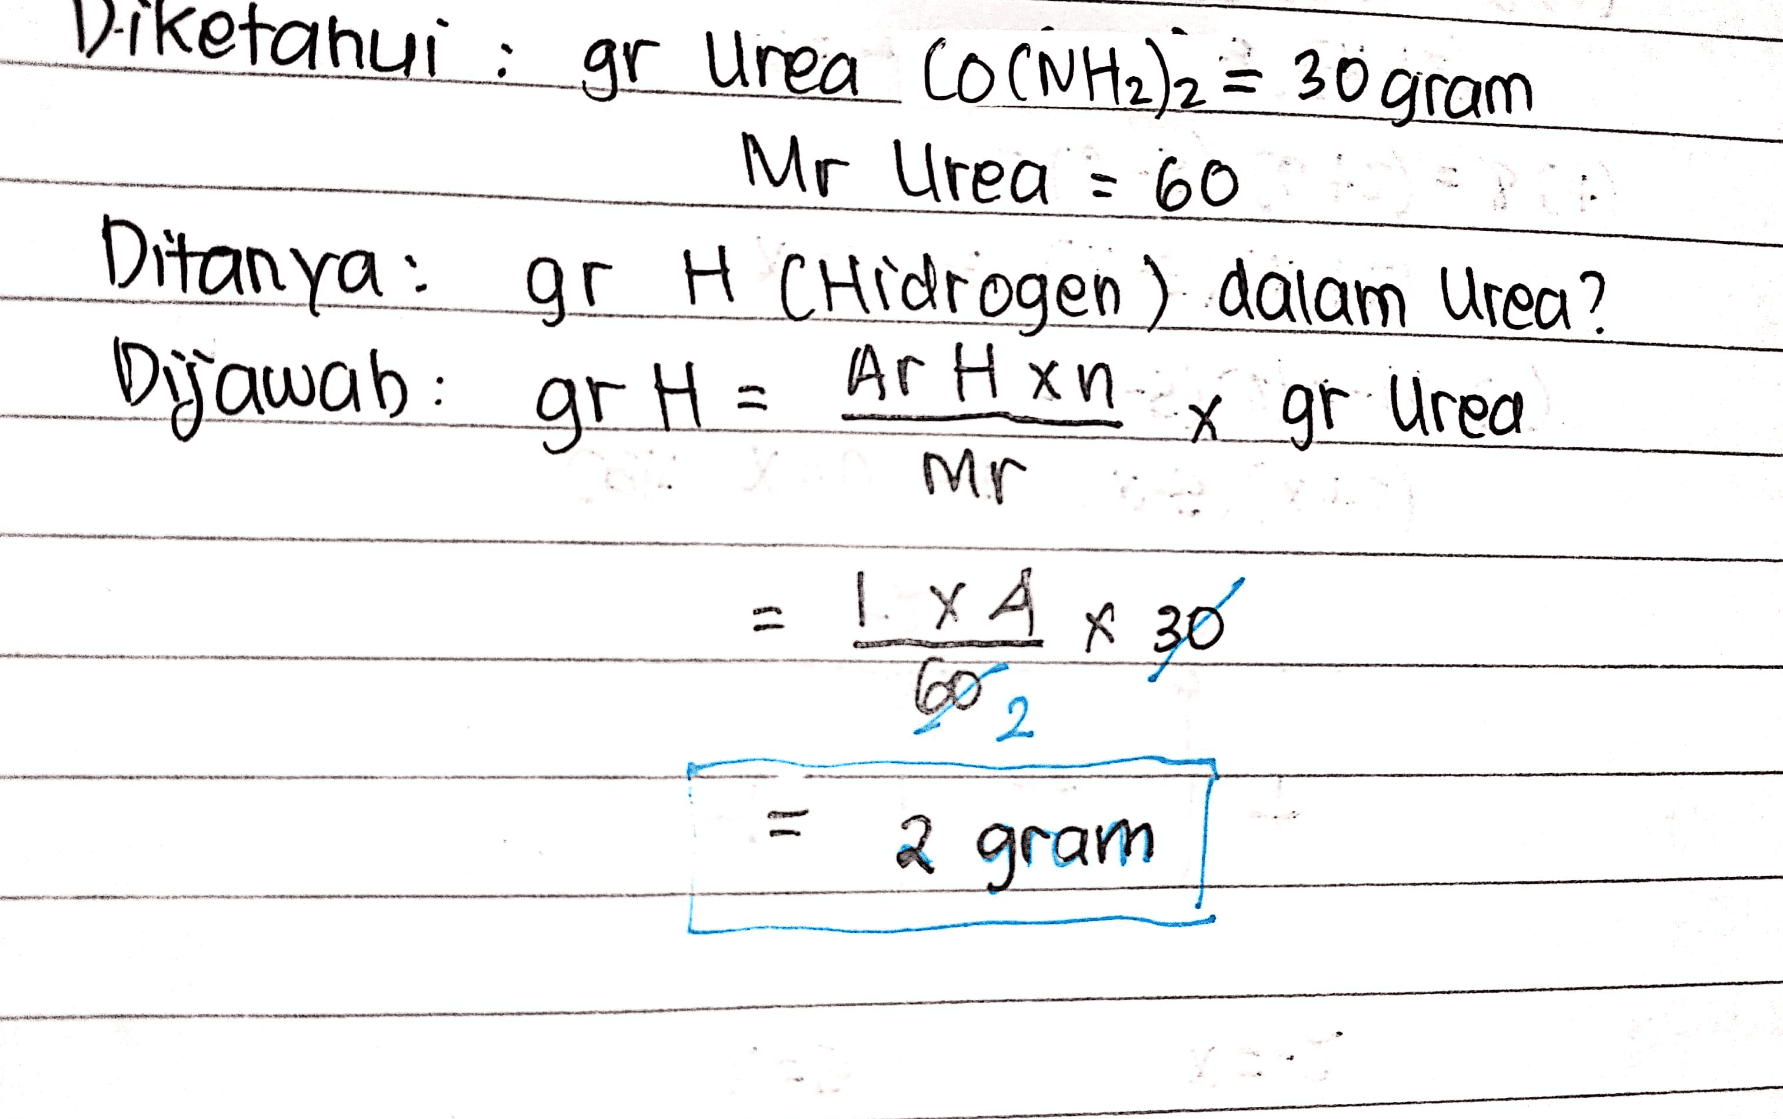 Diketahui : gr Urea COCNH2)2 = 30 gram Mr Urea = 60 Ditanya: gr H CHidrogen). dalam Urea? Ar Han Dijawah: grH x gr Urea Mr - 1 x A x 30 60 2 2 gram 